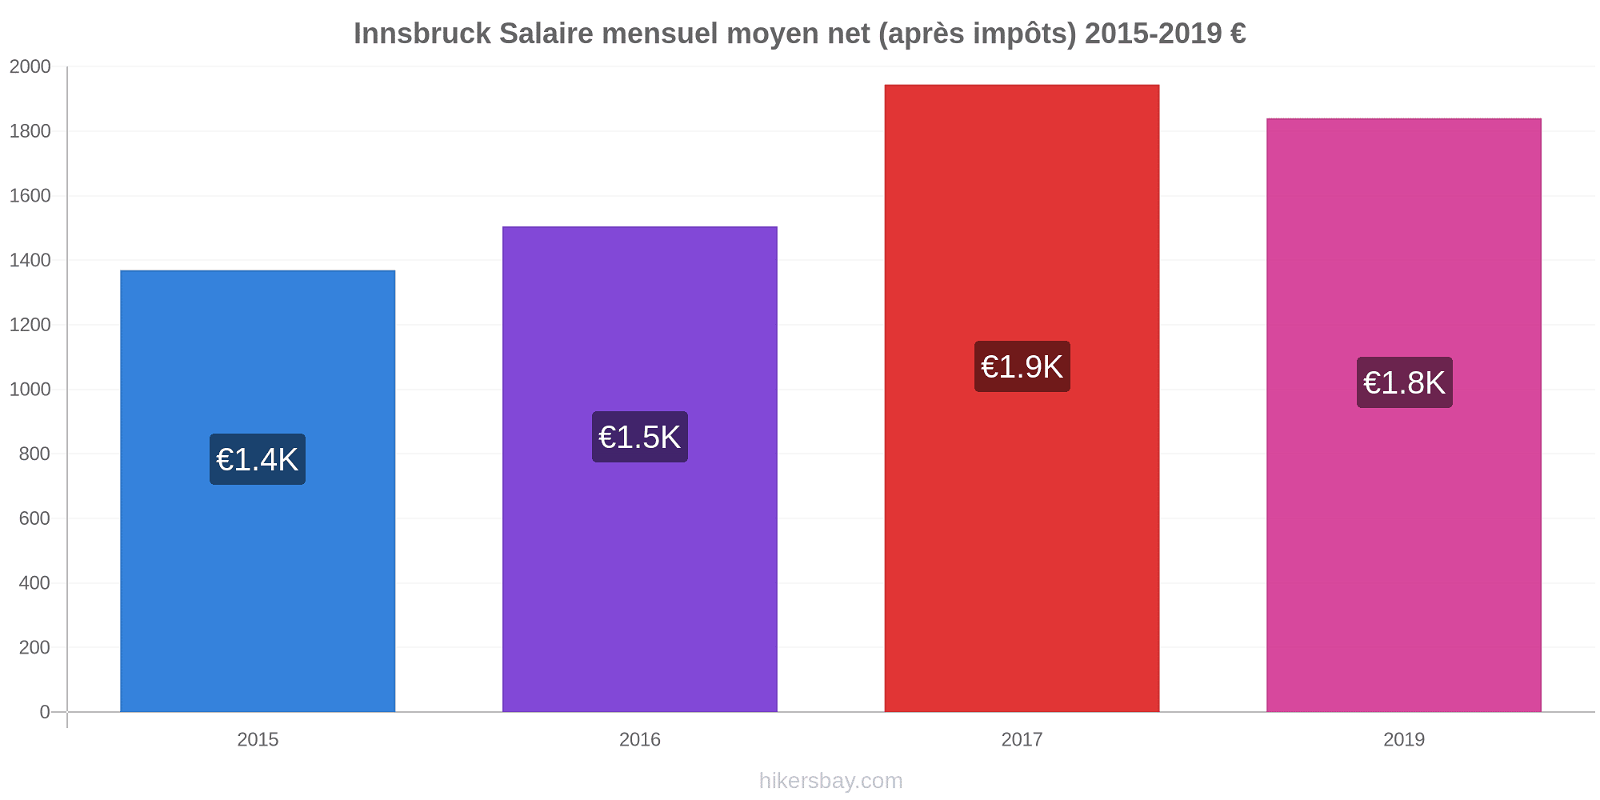 Innsbruck changements de prix Salaire mensuel Net (après impôts) hikersbay.com